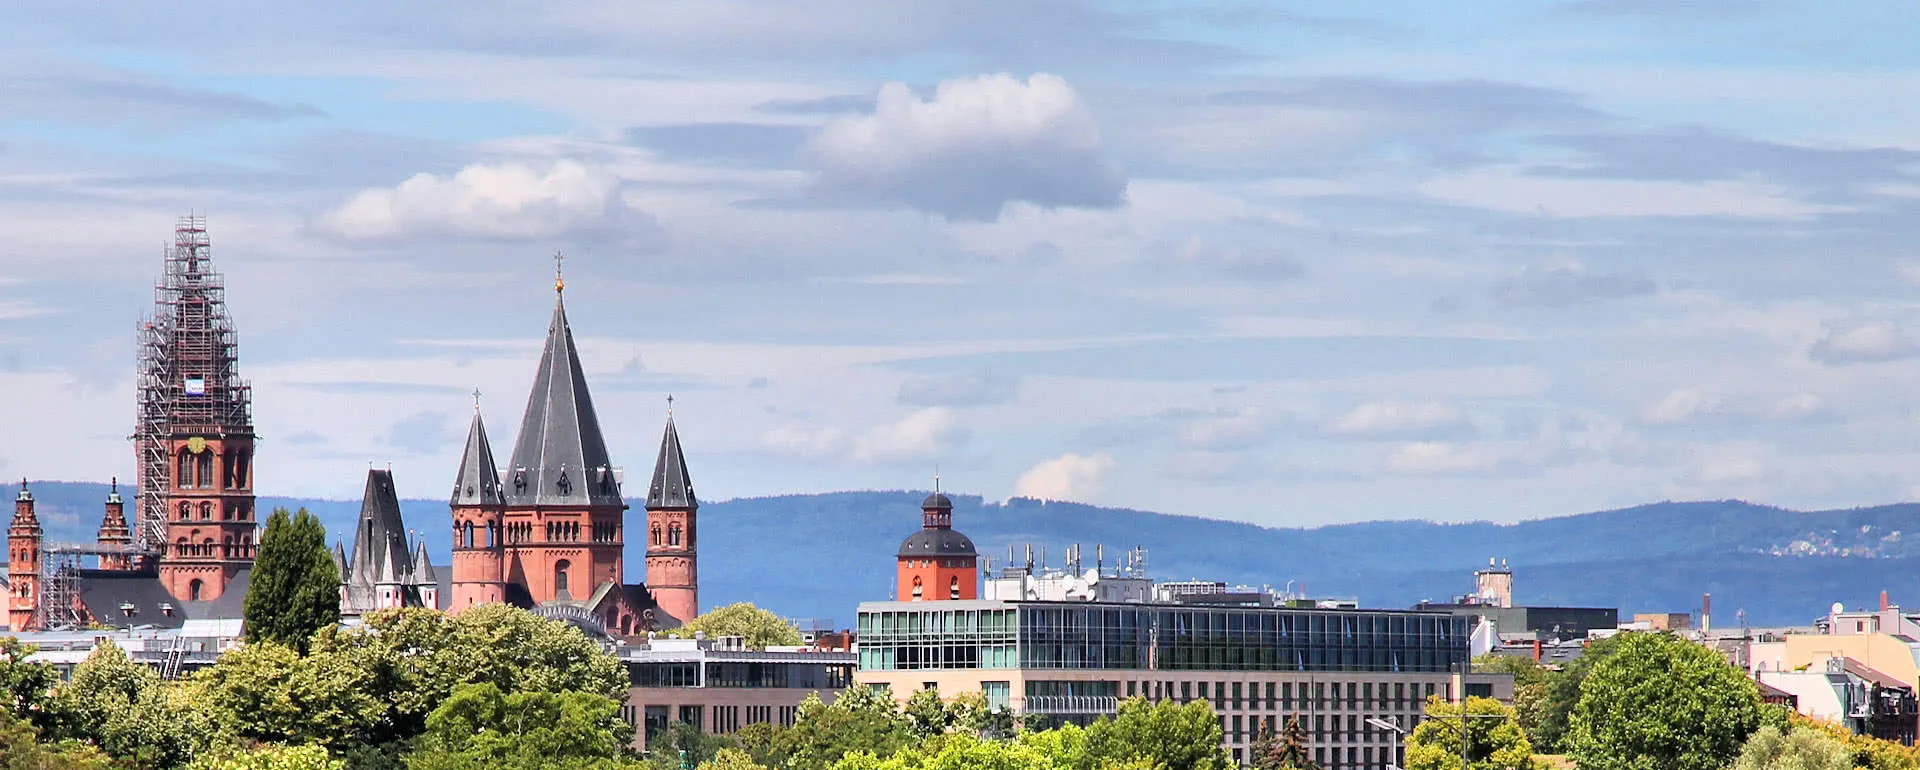 Mainz - the destination for company trips